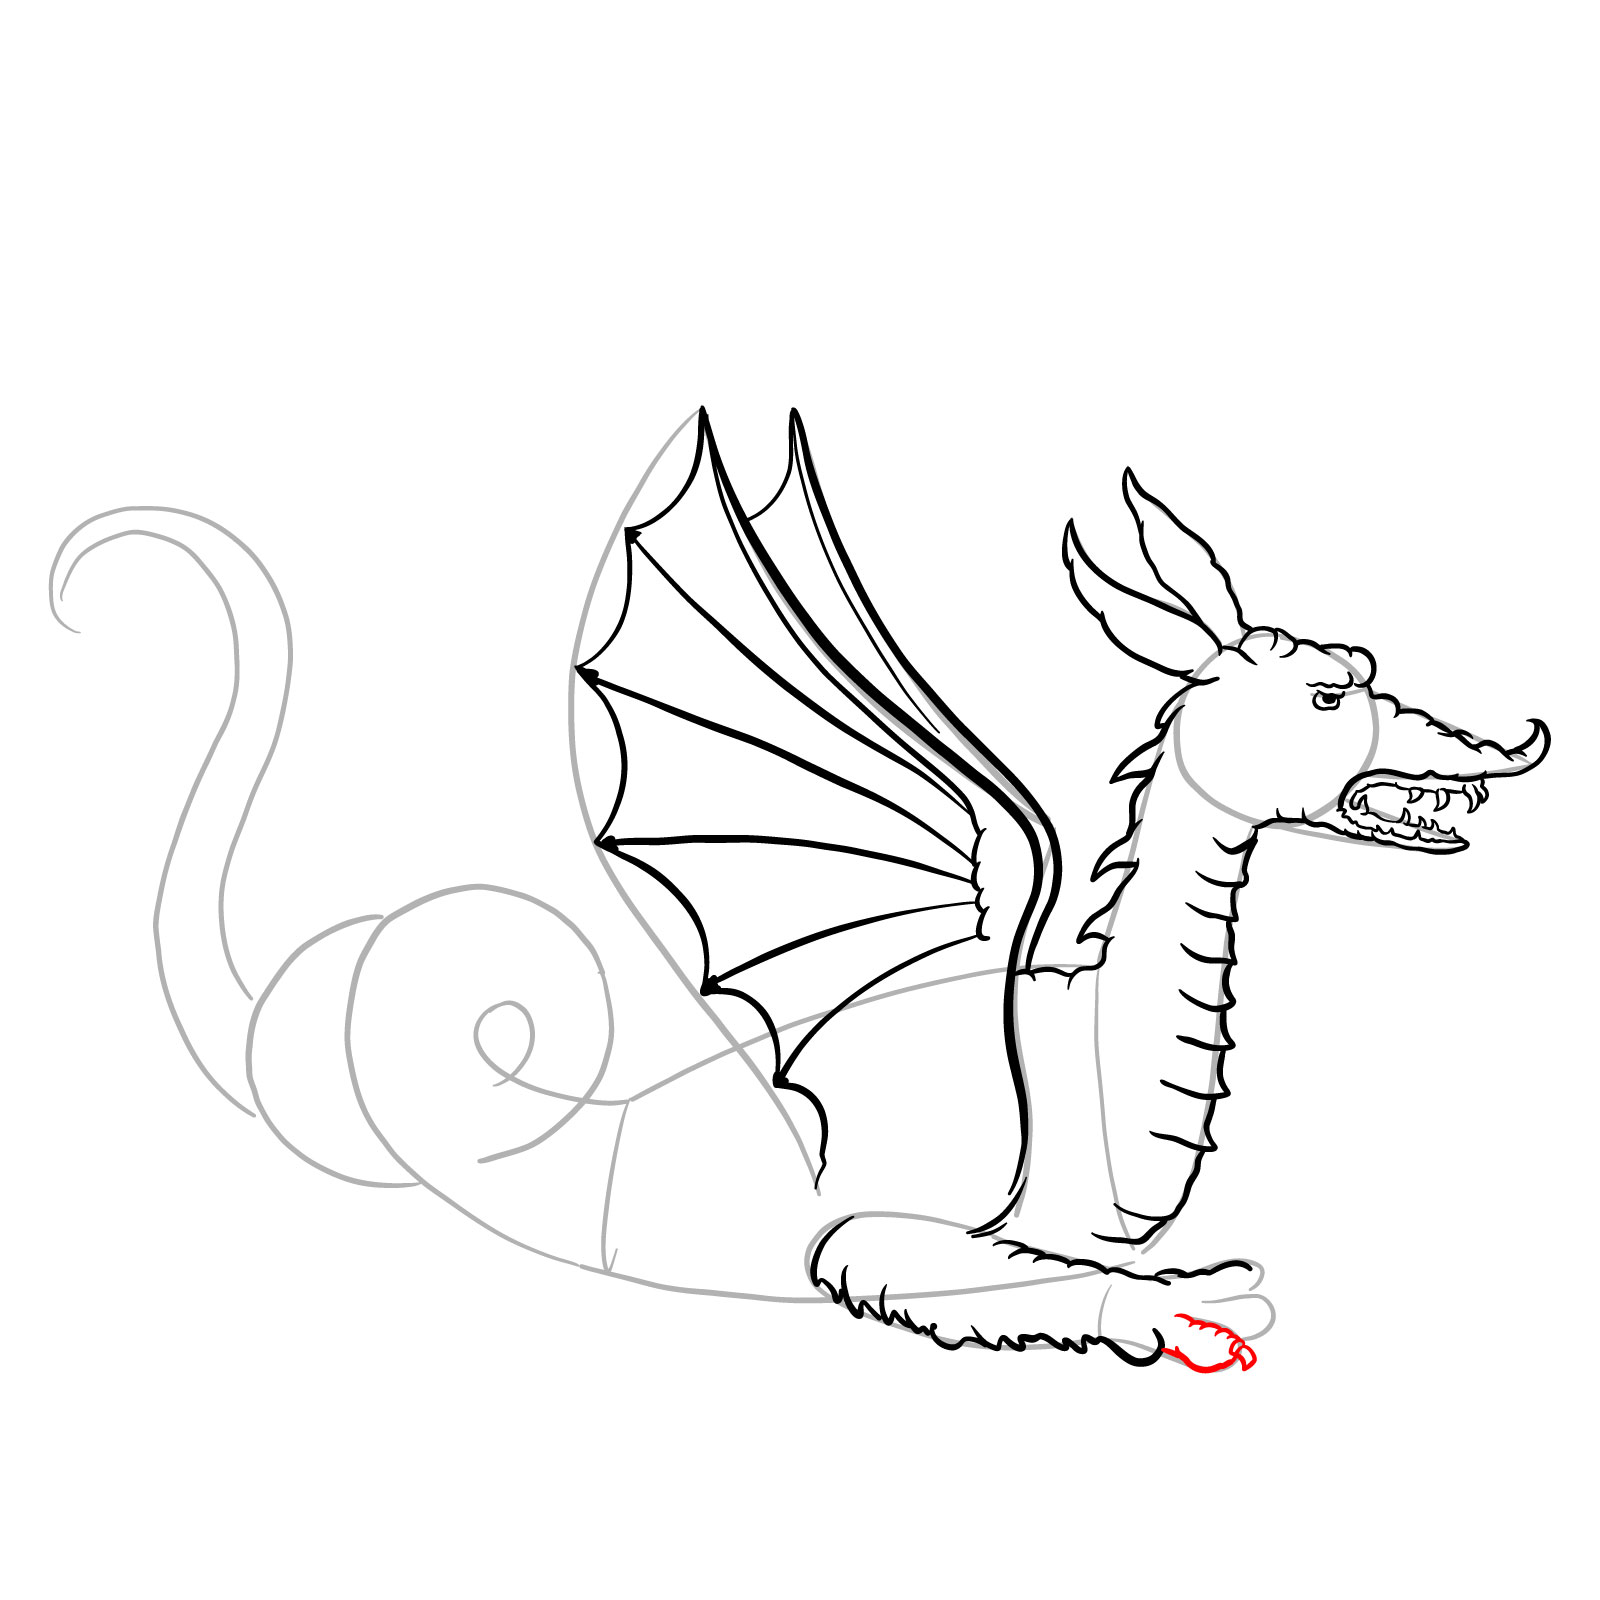 How to draw a Knucker dragon - step 20